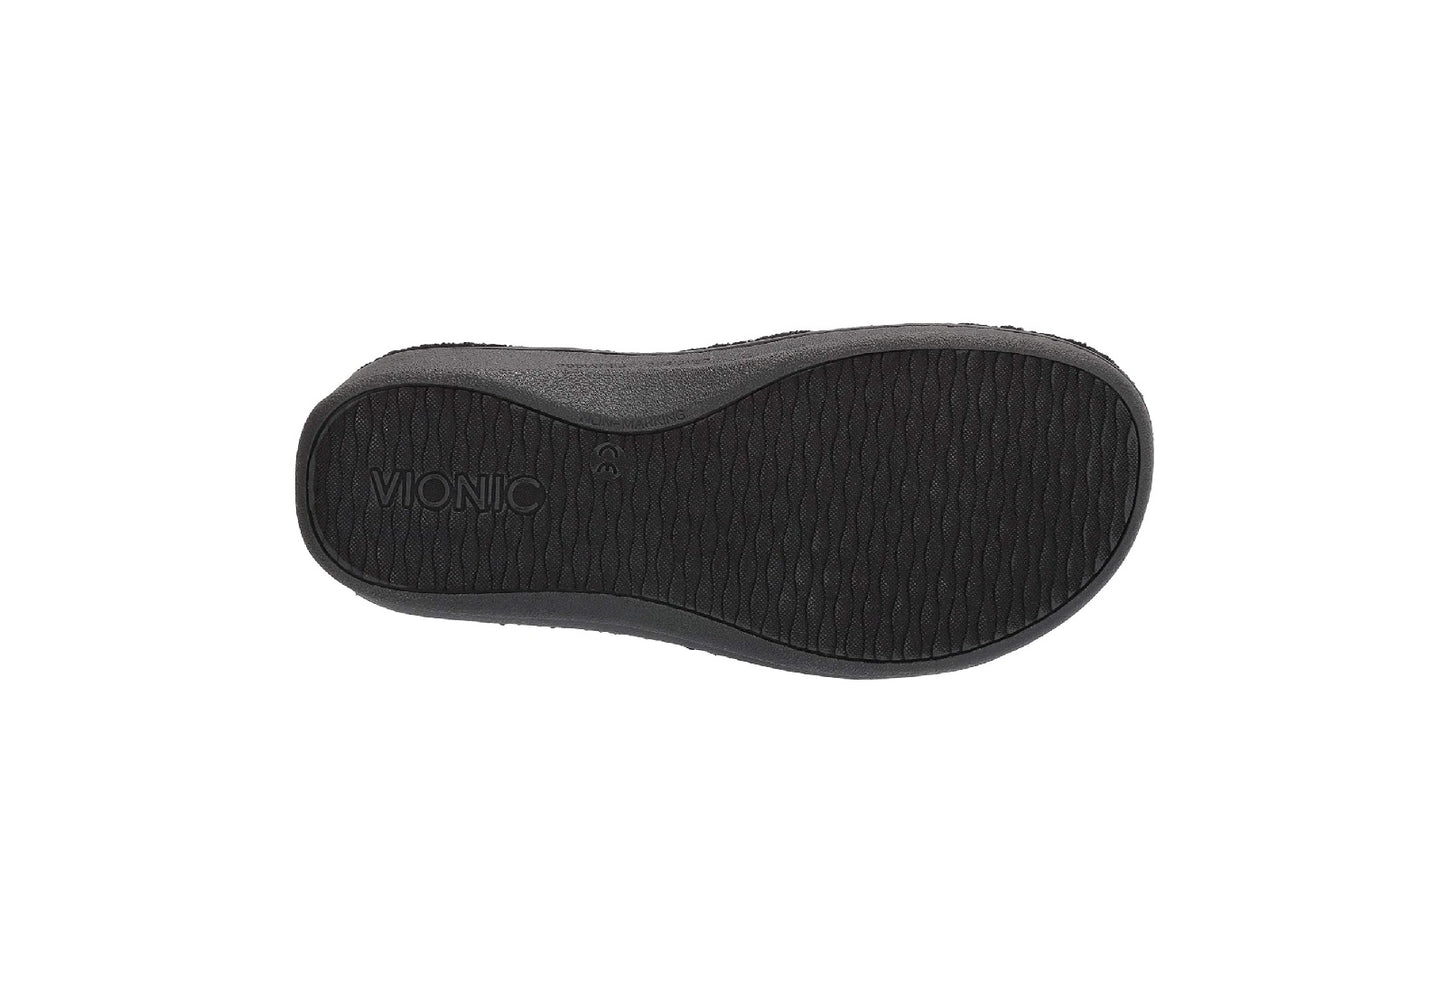 Vionic Women's Relax Slippers, Black